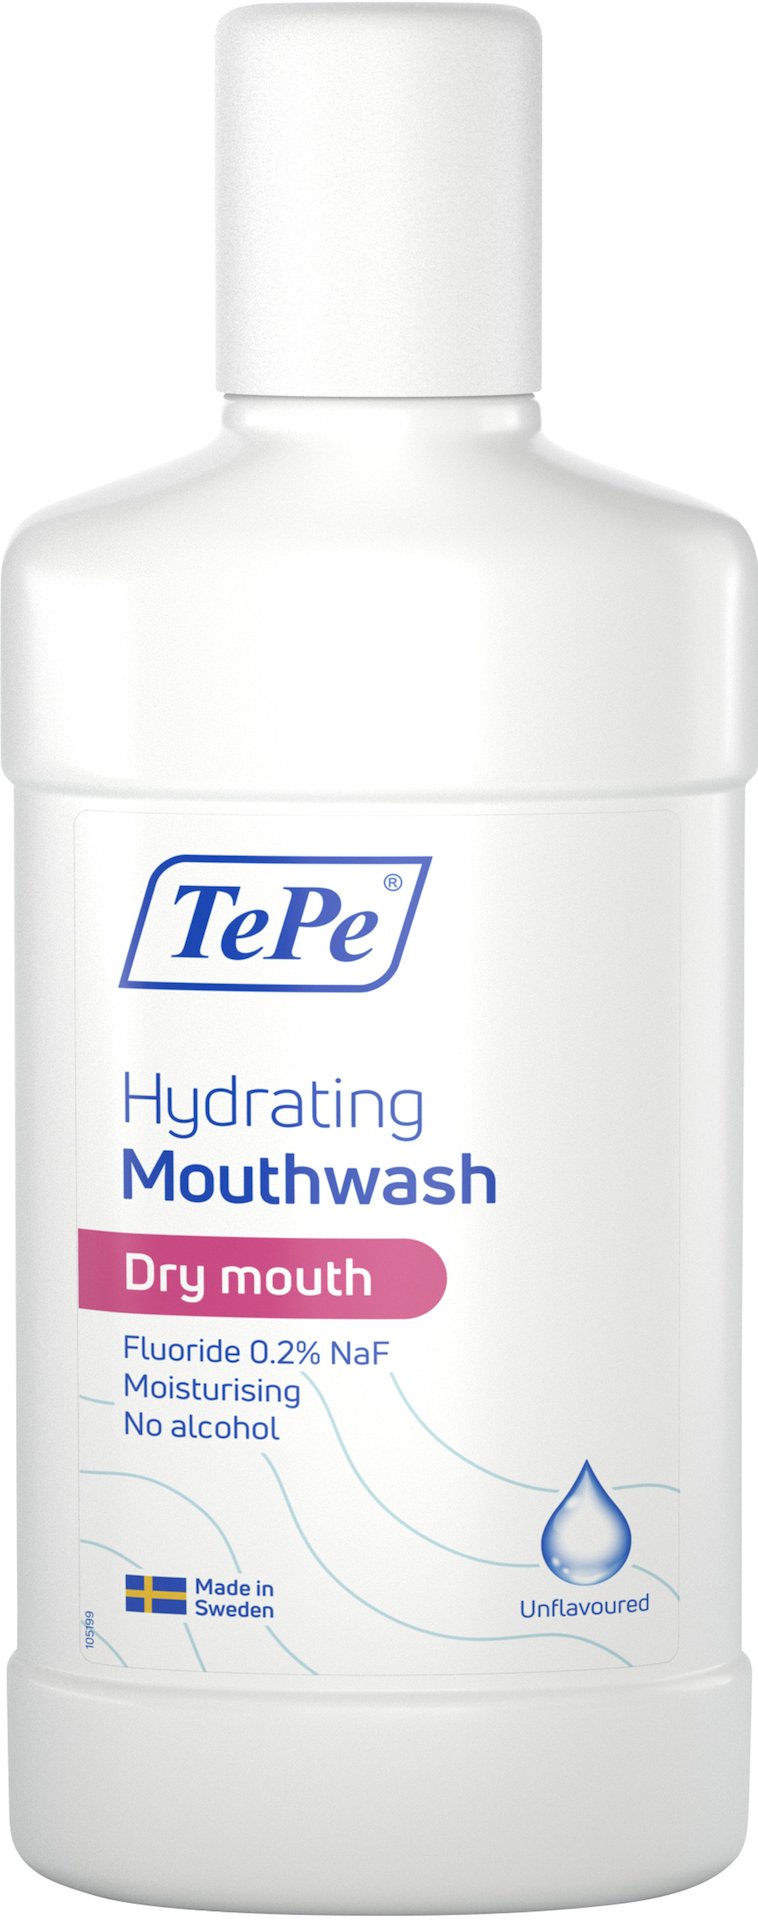 Tepe Hydrating Mouthwash Unflavoured 500 ml